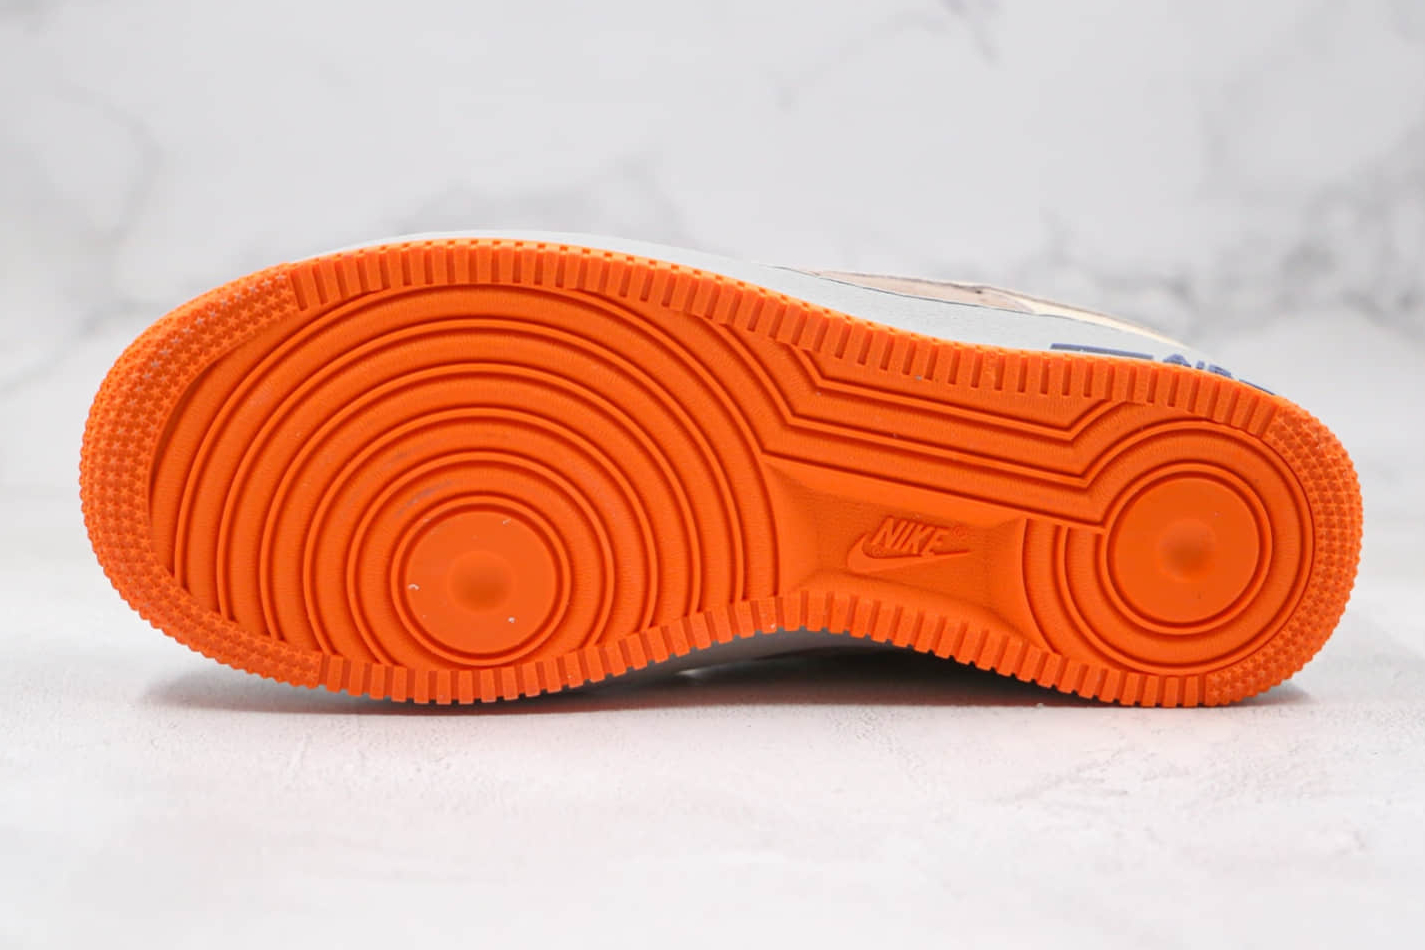 Nike Air Force 1 Low Dark Grey Orange Blue Shoes DD7209-105 - Trendy Sneakers | Free Shipping